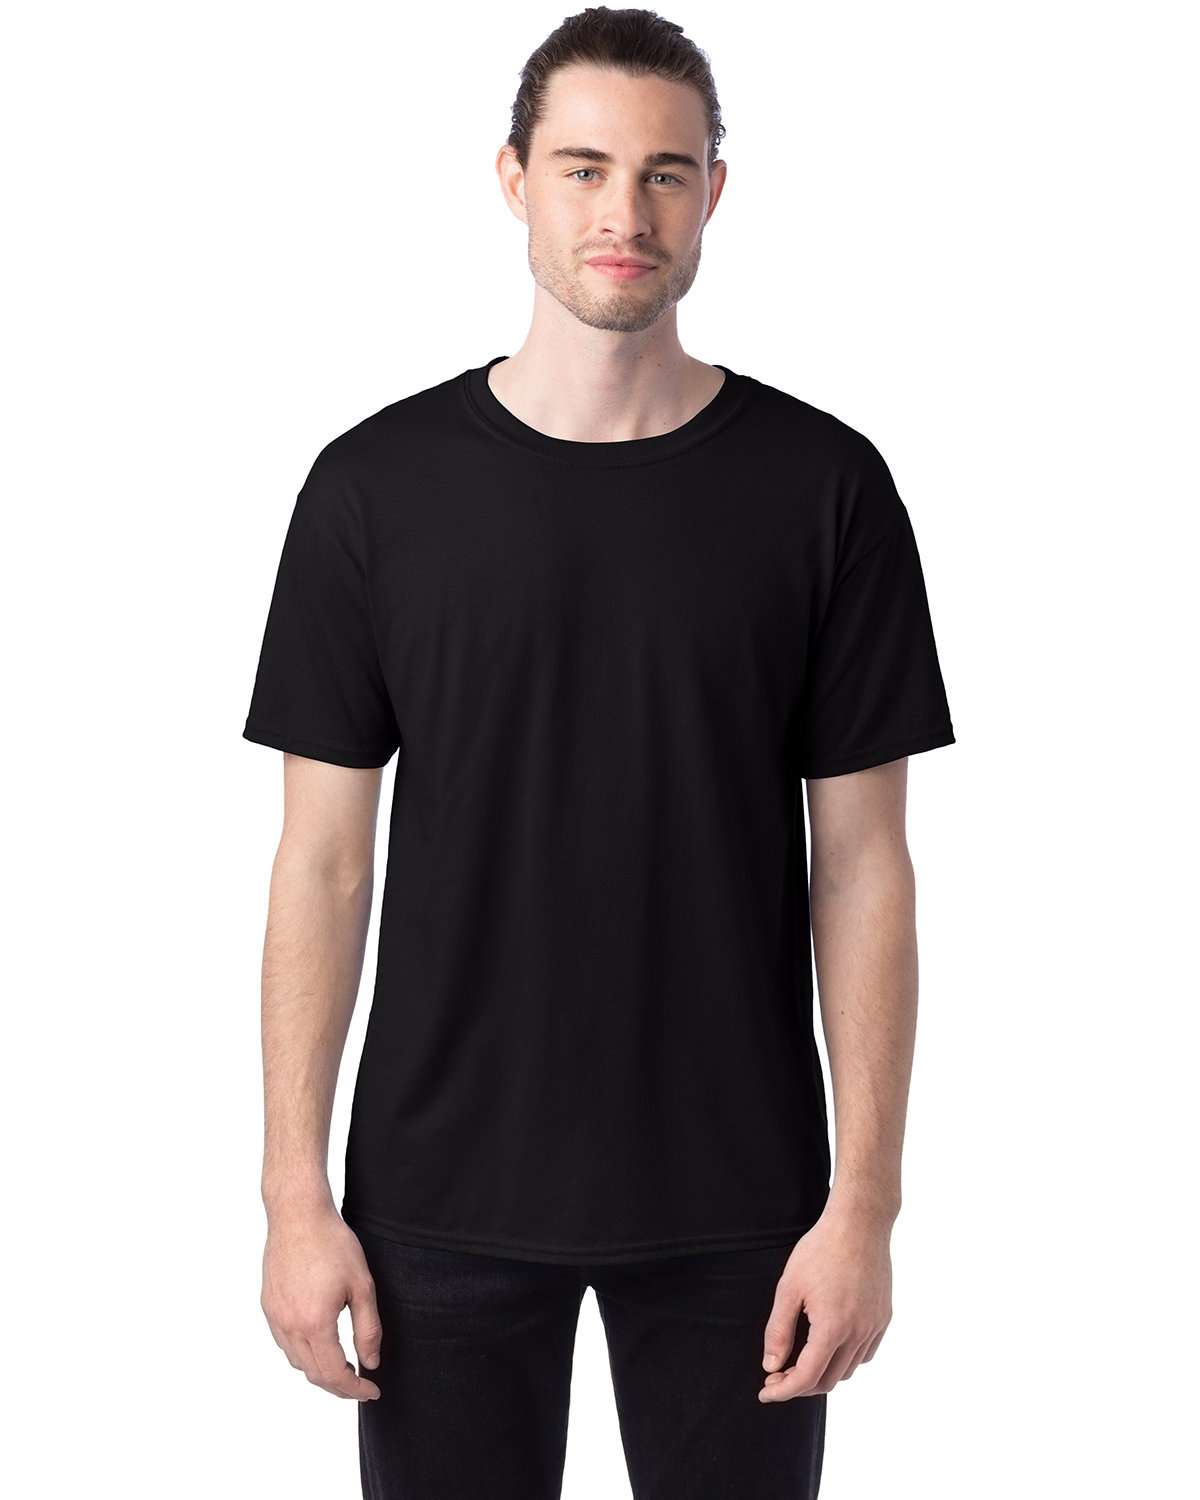 Hanes Unisex 50/50 T-Shirt BLACK 